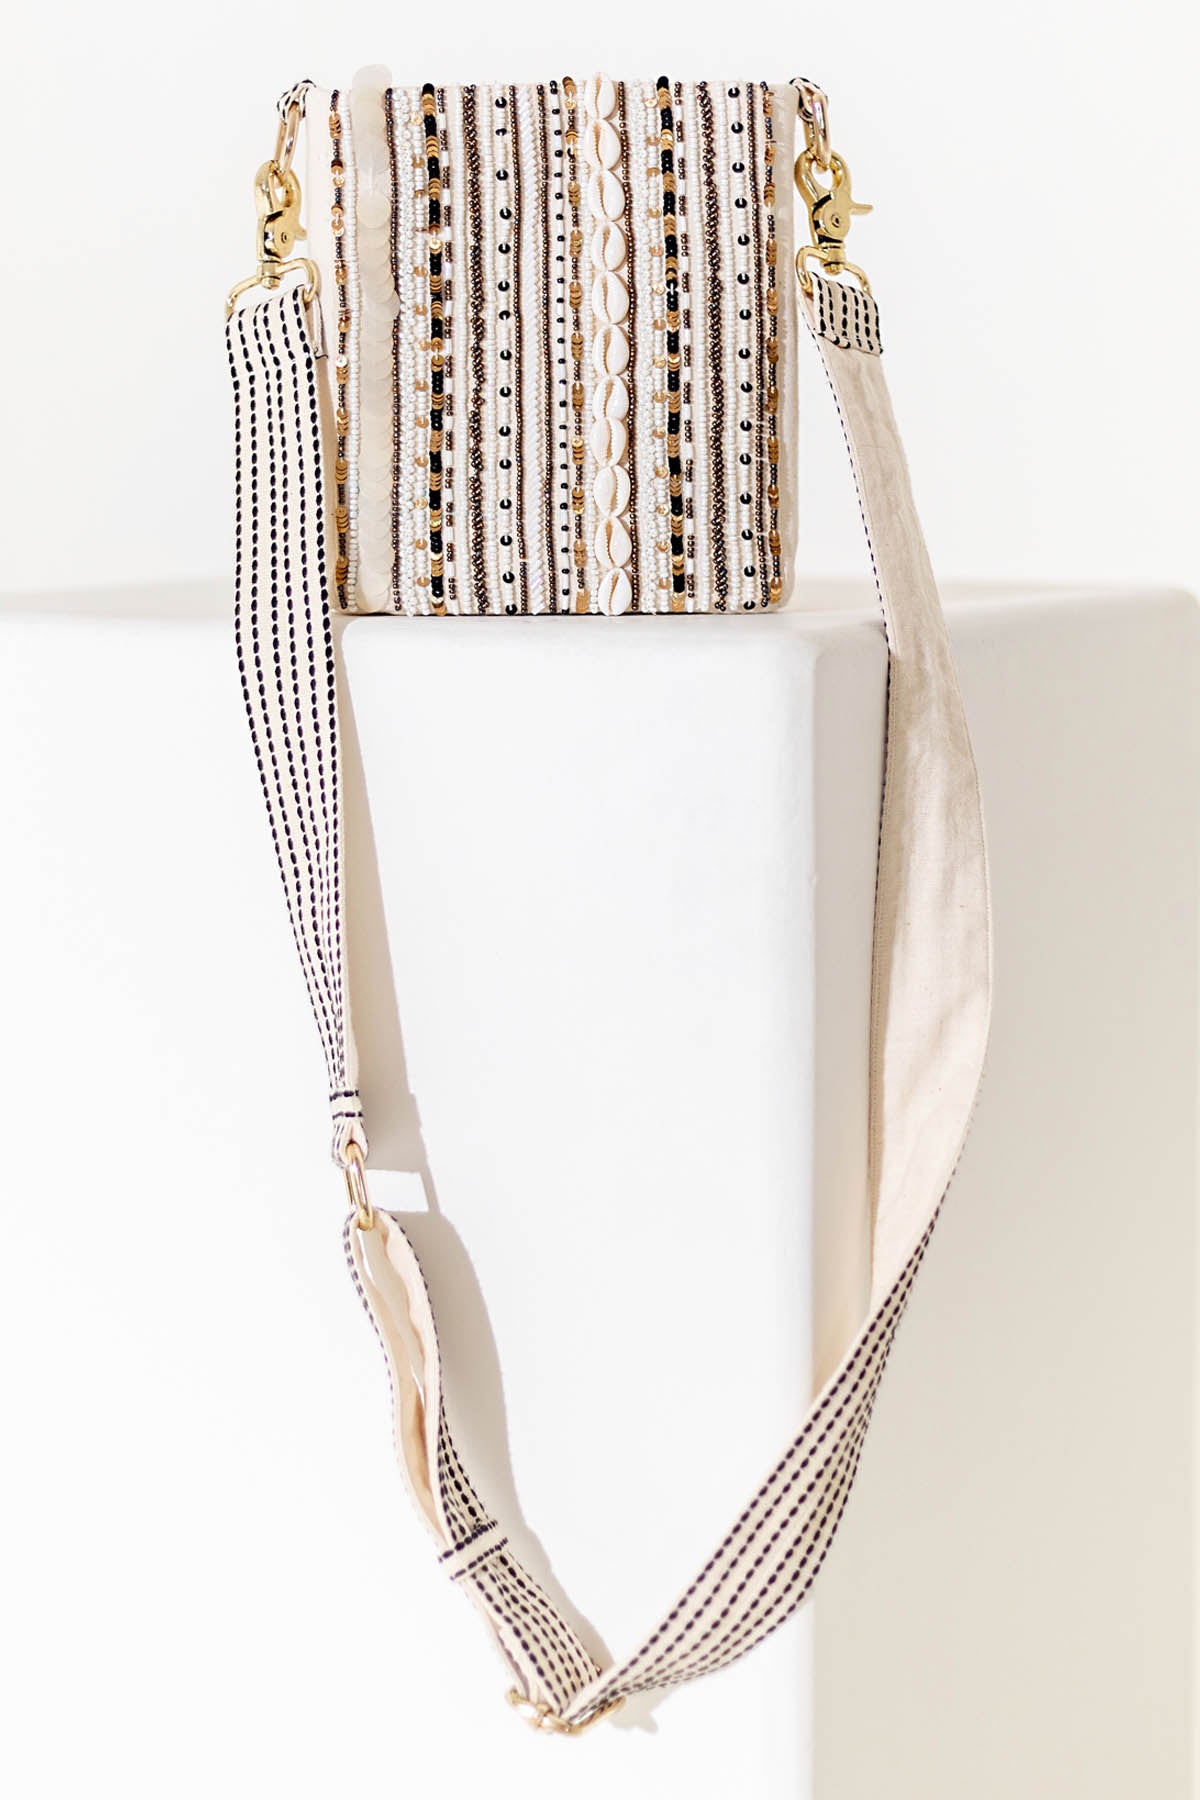 Buy Kusmi Boho Bliss: Handwoven Embroidered Sling Bag at Scrollnshops